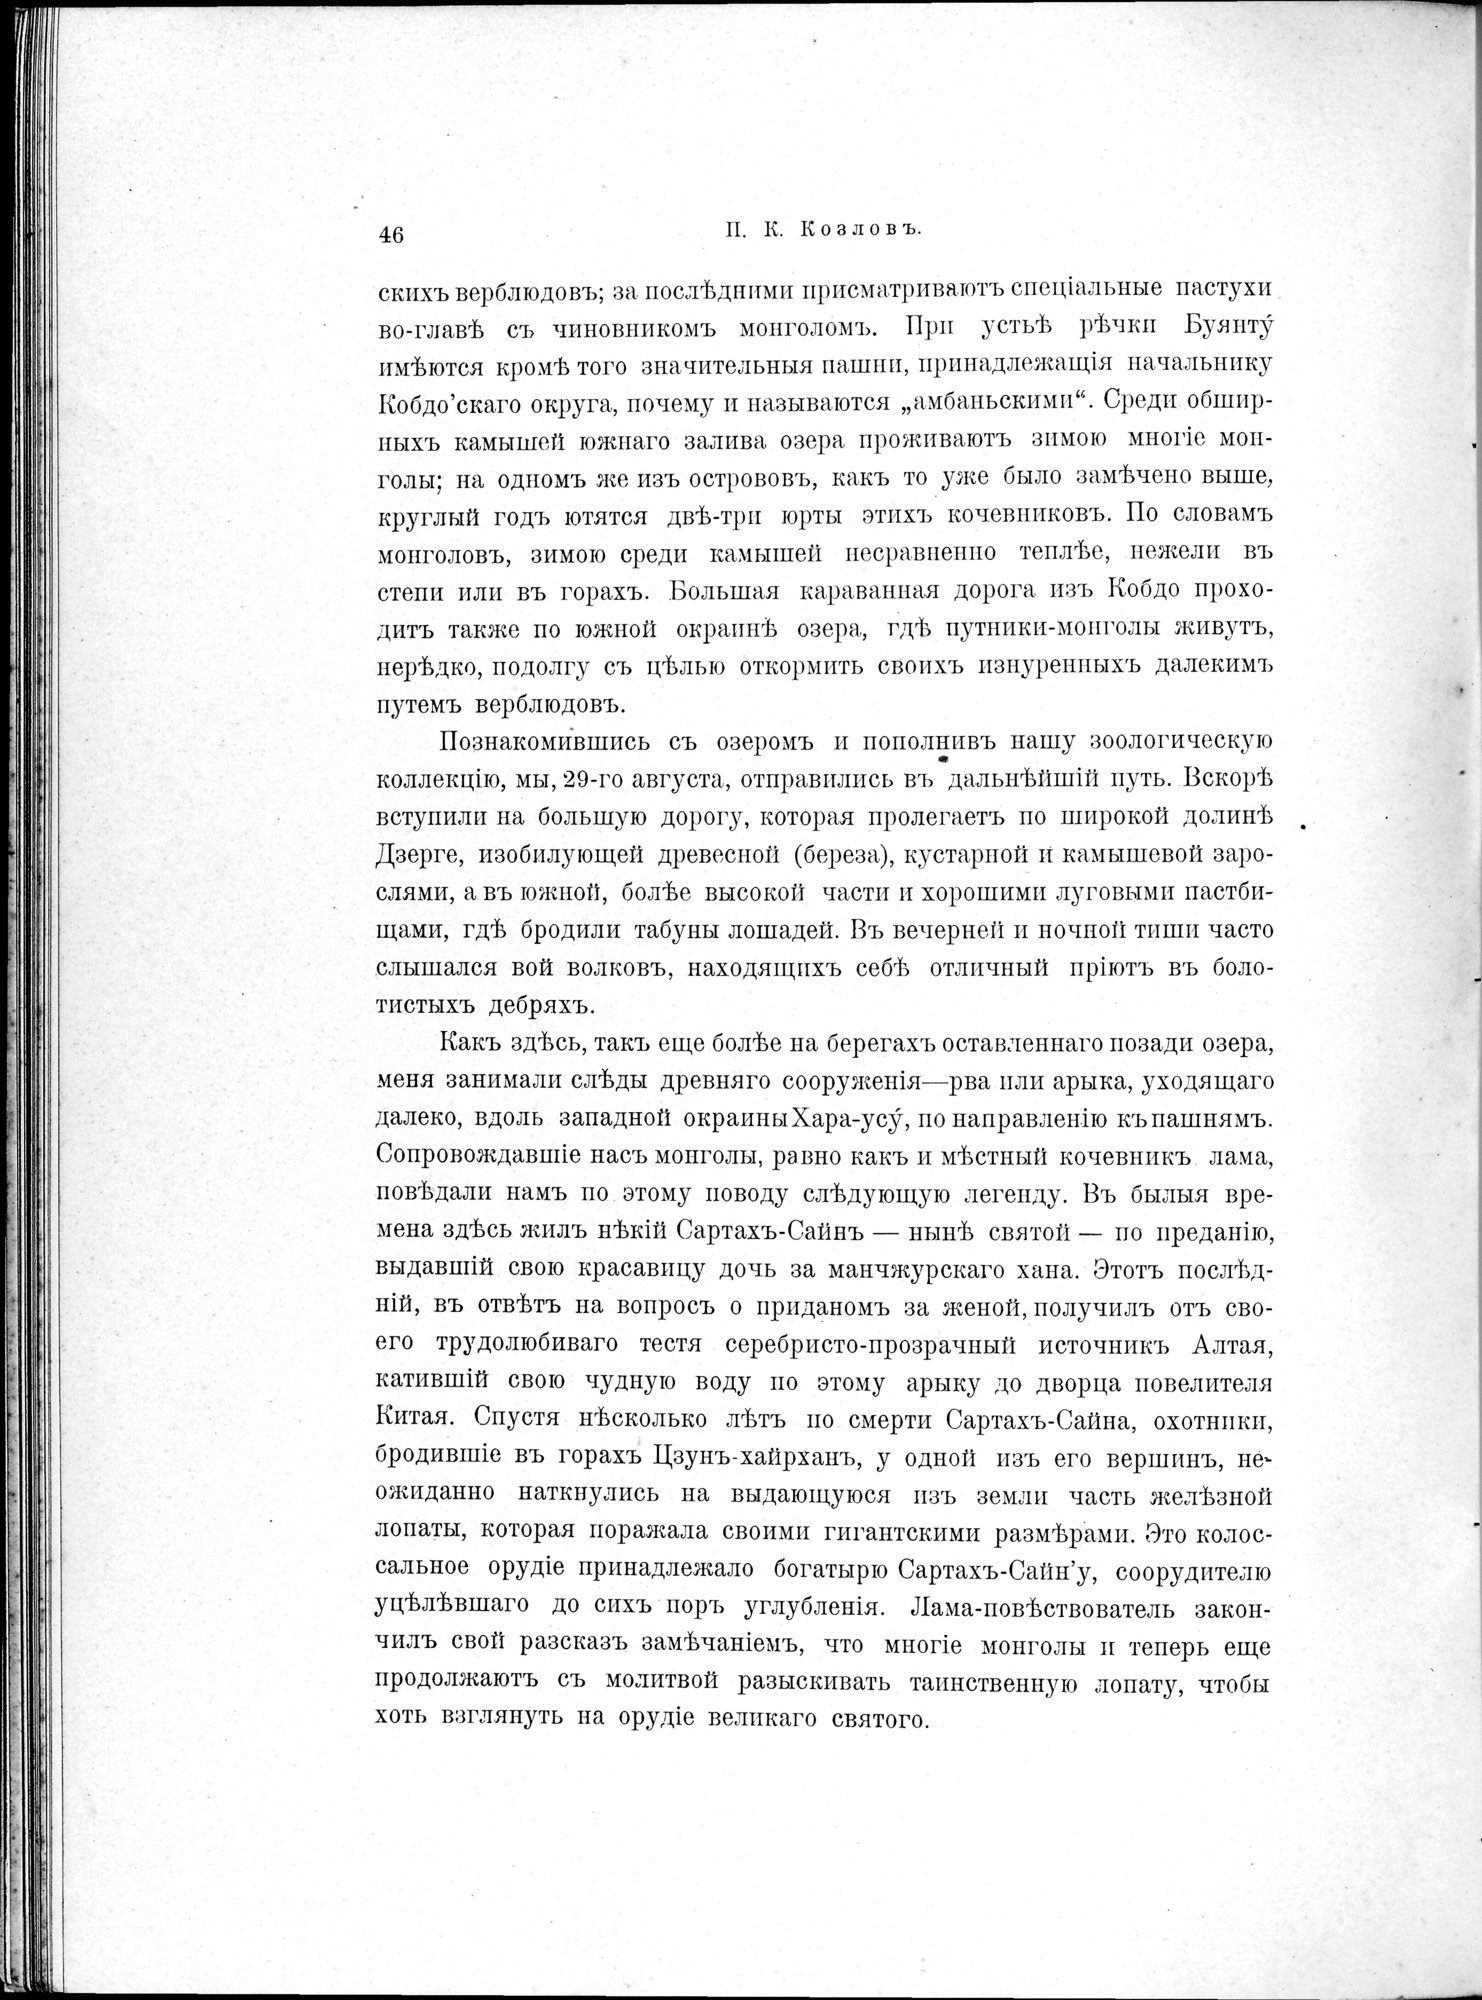 Mongoliia i Kam : vol.1 / Page 80 (Grayscale High Resolution Image)